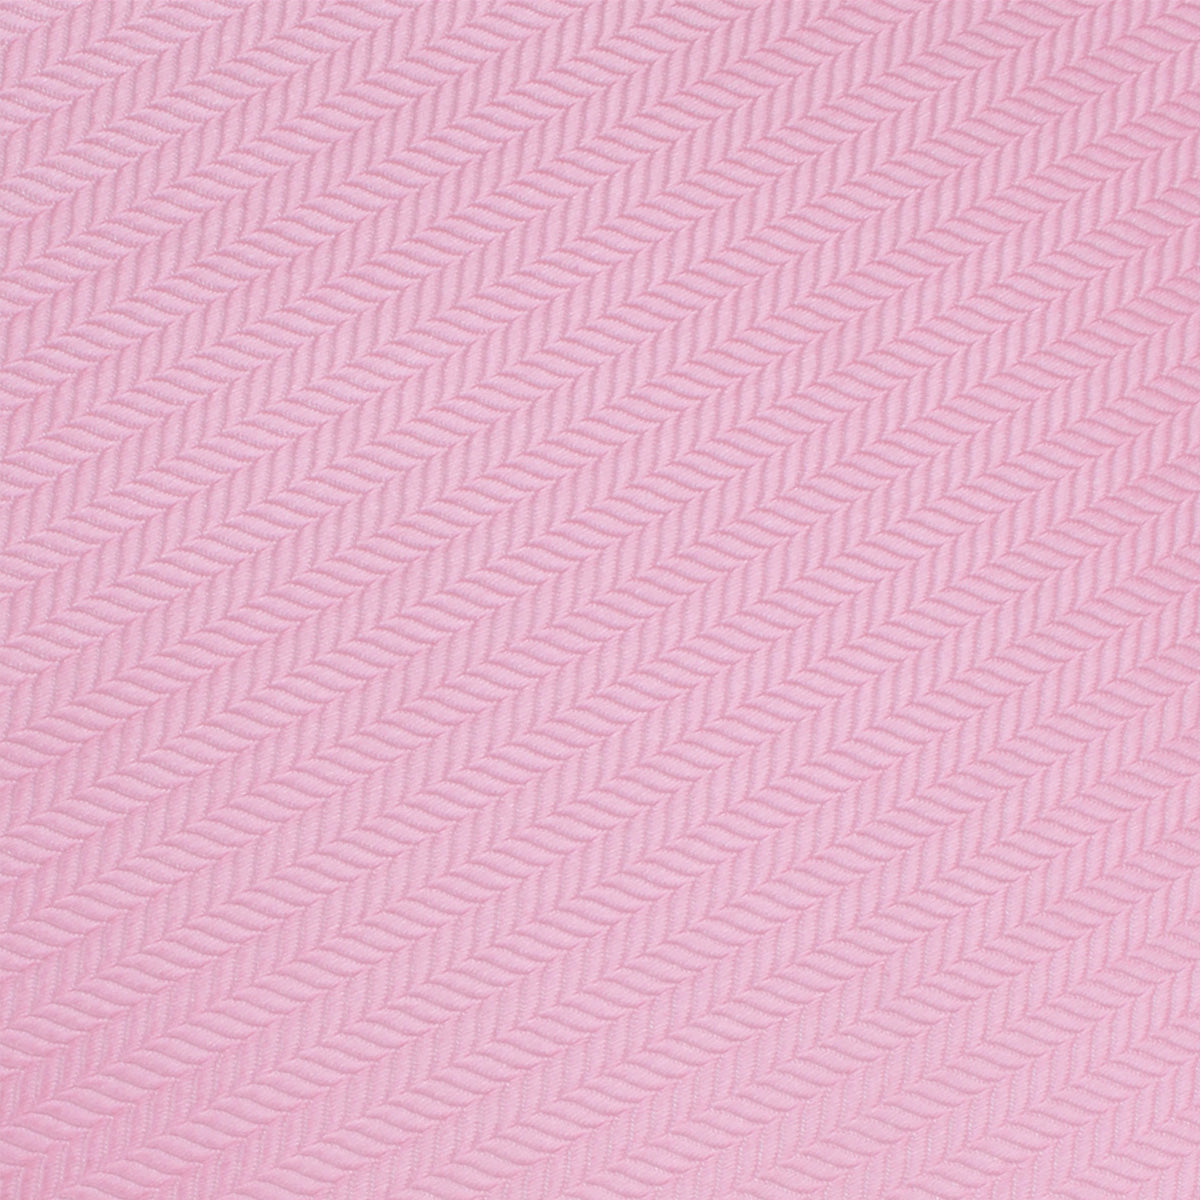 Tickled Pink Herringbone Chevron Pocket Square Fabric